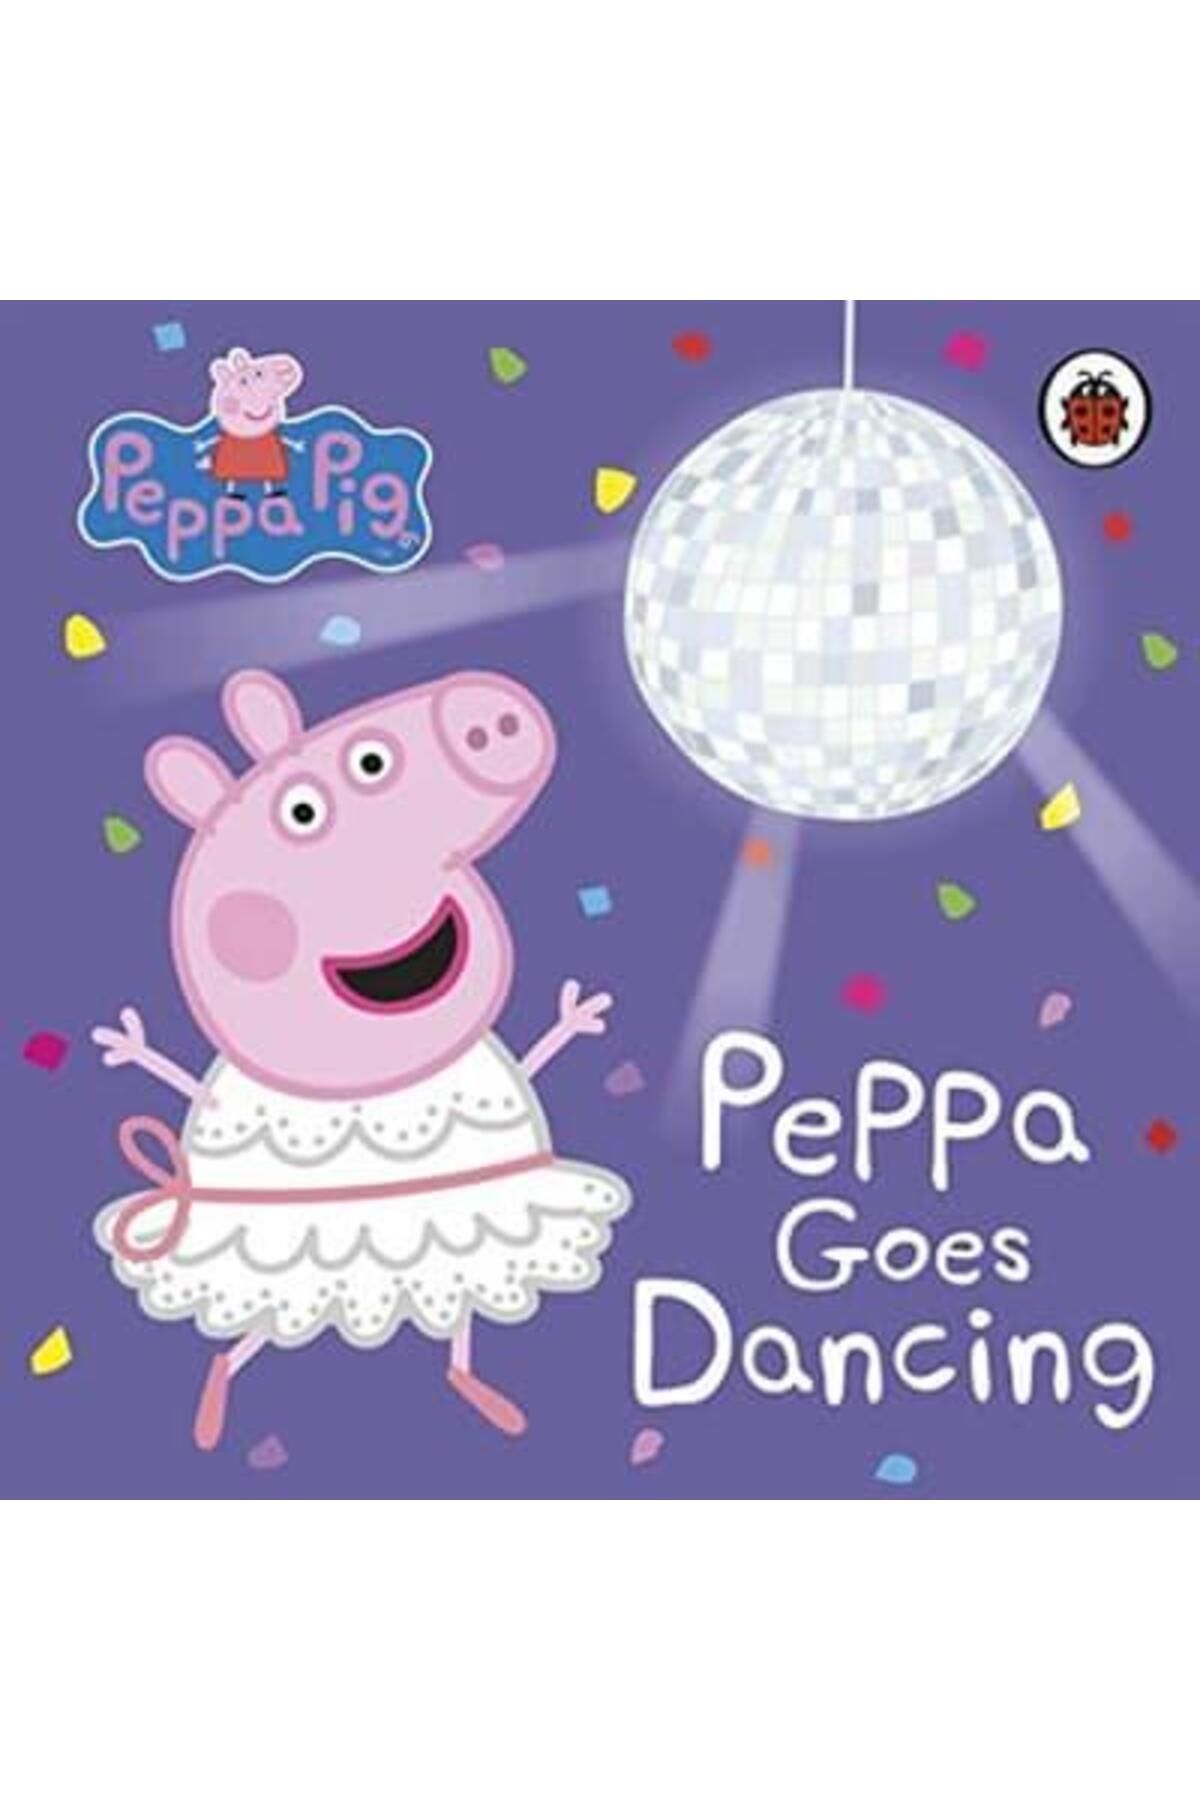 Penguen Peppa Pig: Peppa Goes Dancing